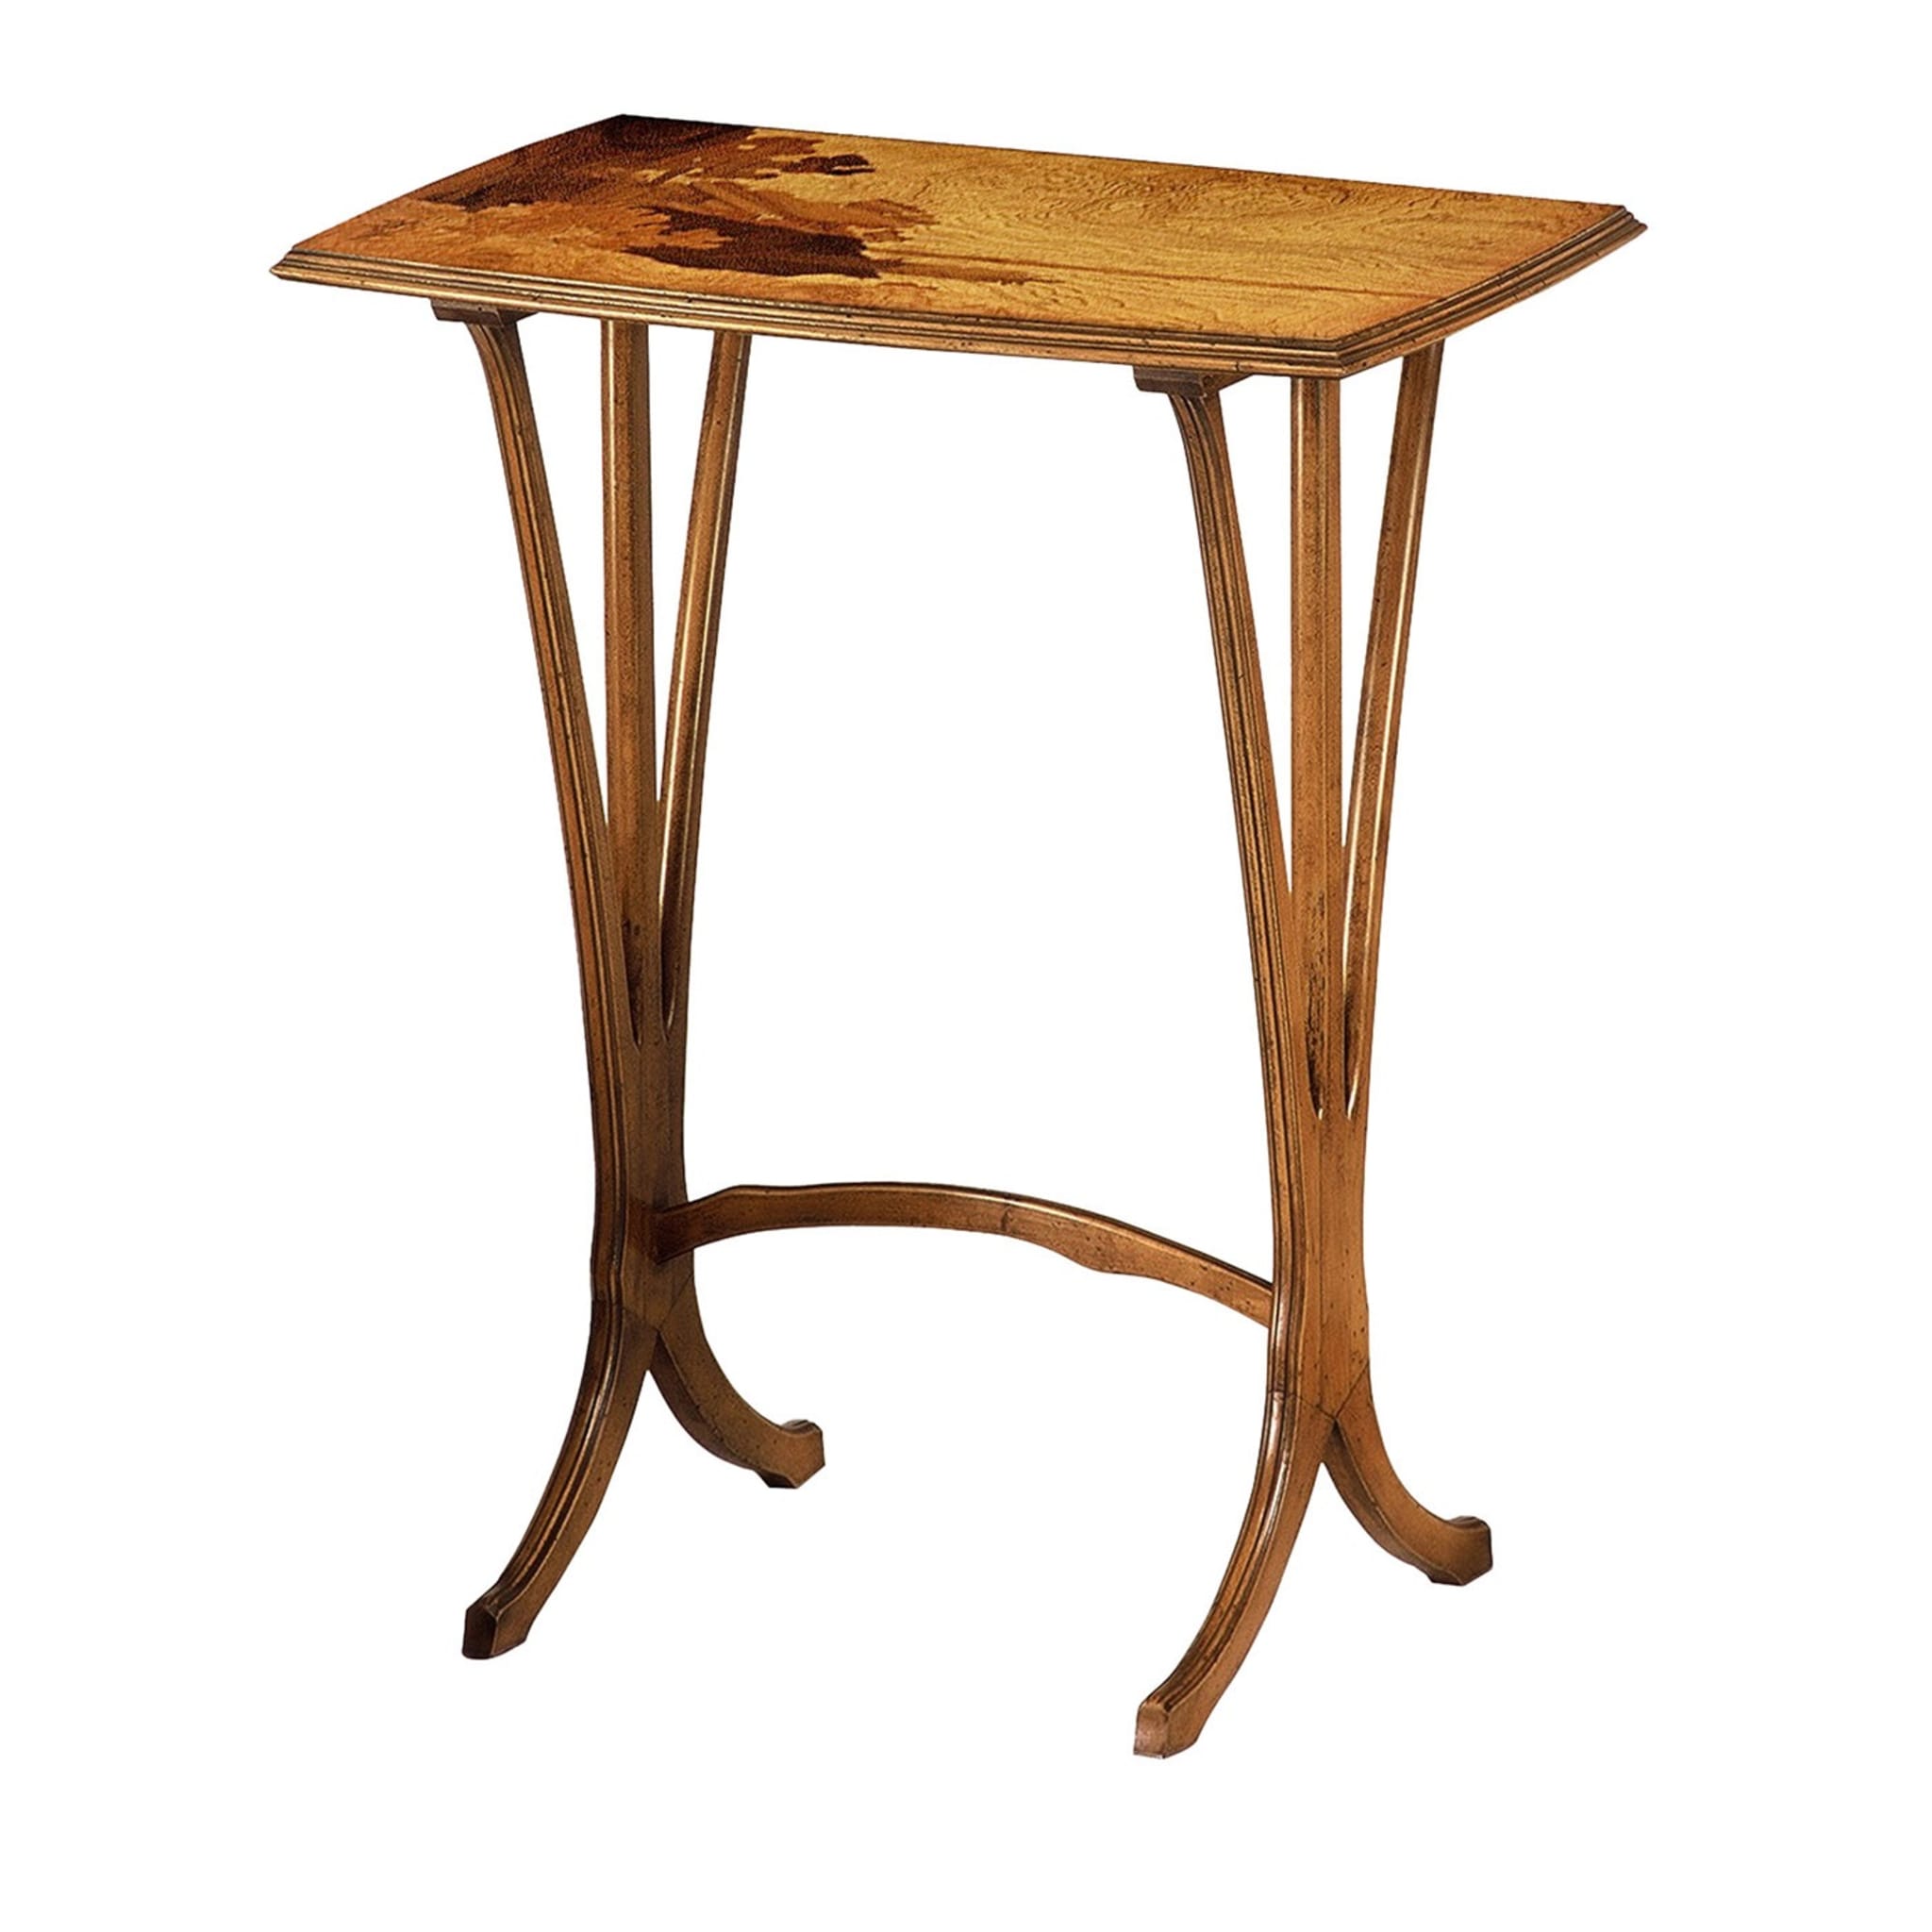 French Art Nouveau-Style Side Table by Emile Gallè #7 - Main view